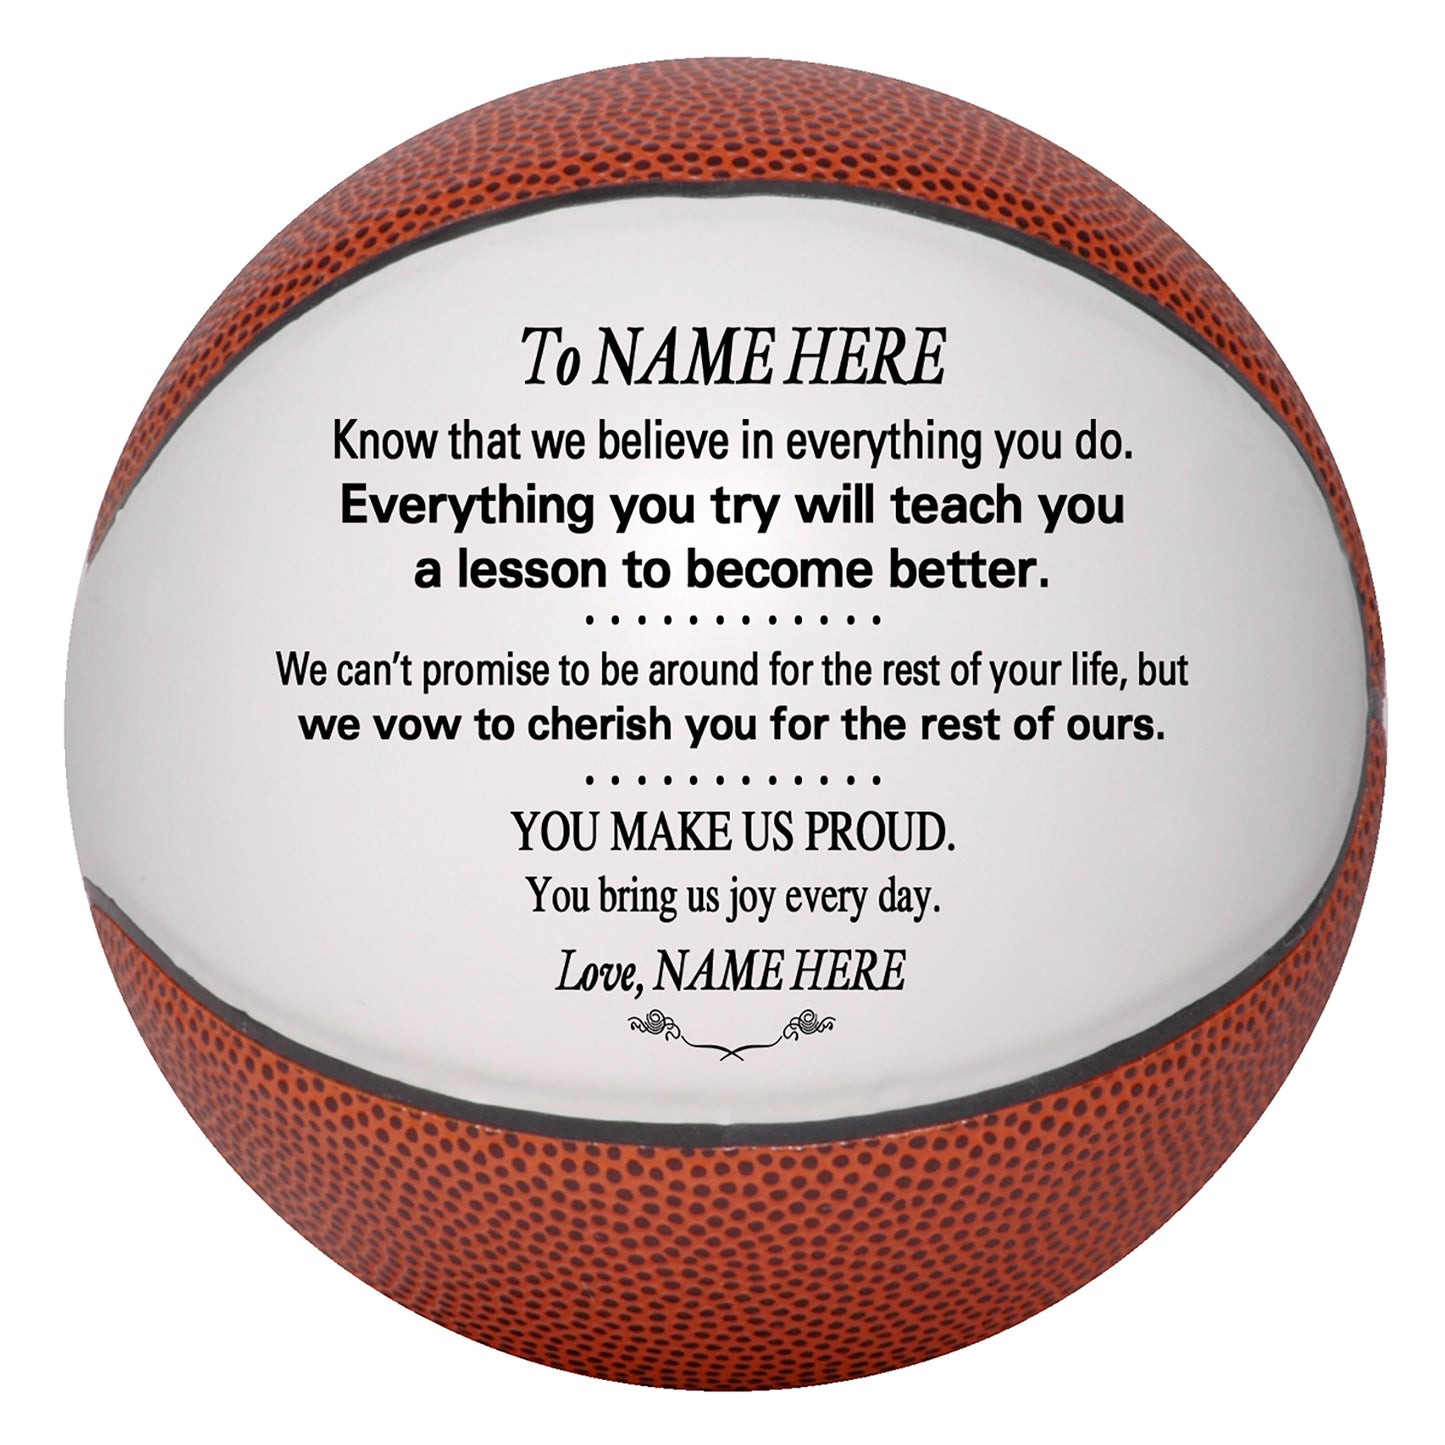 Personalized Grandson Basketball Keepsake - To Our Grandson - To My Grandson - To Our Son - To My Son